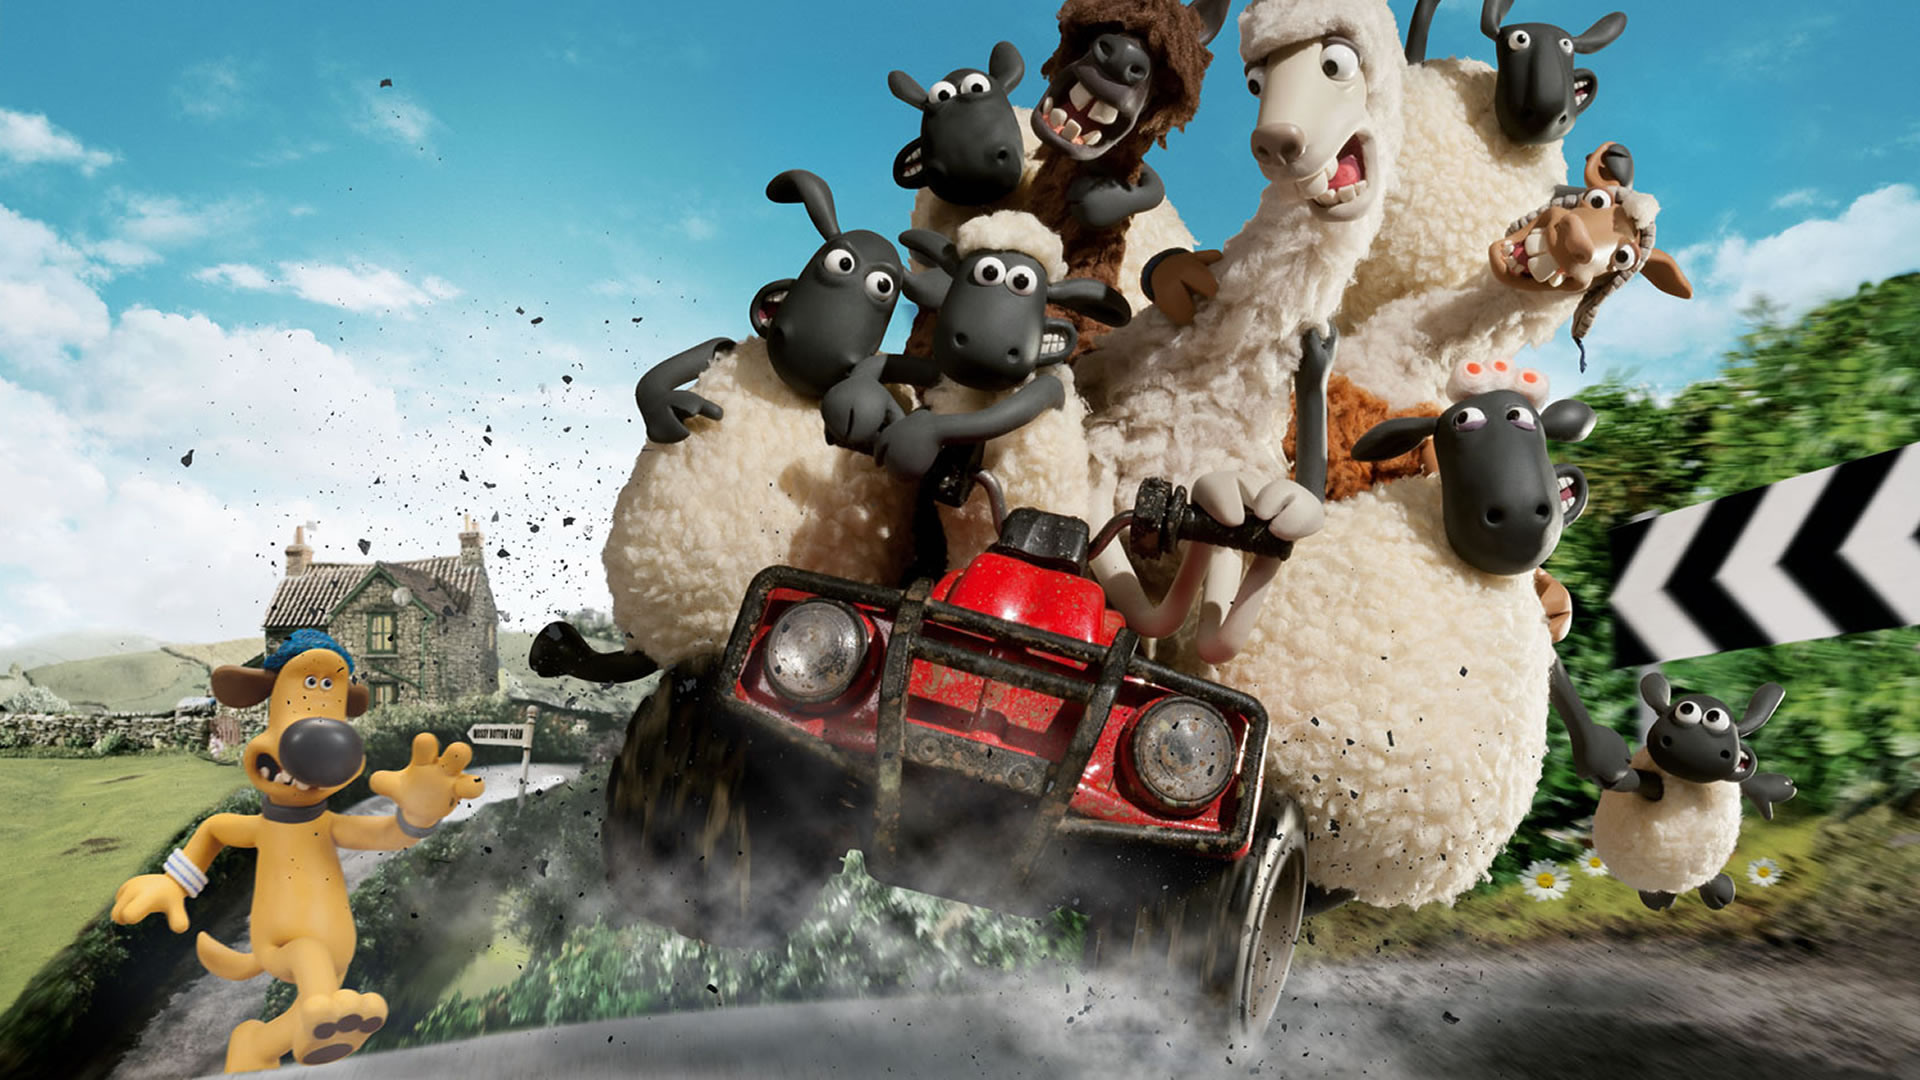 download wallpaper: Shaun the Sheep & de lama’s van de boer wallpaper